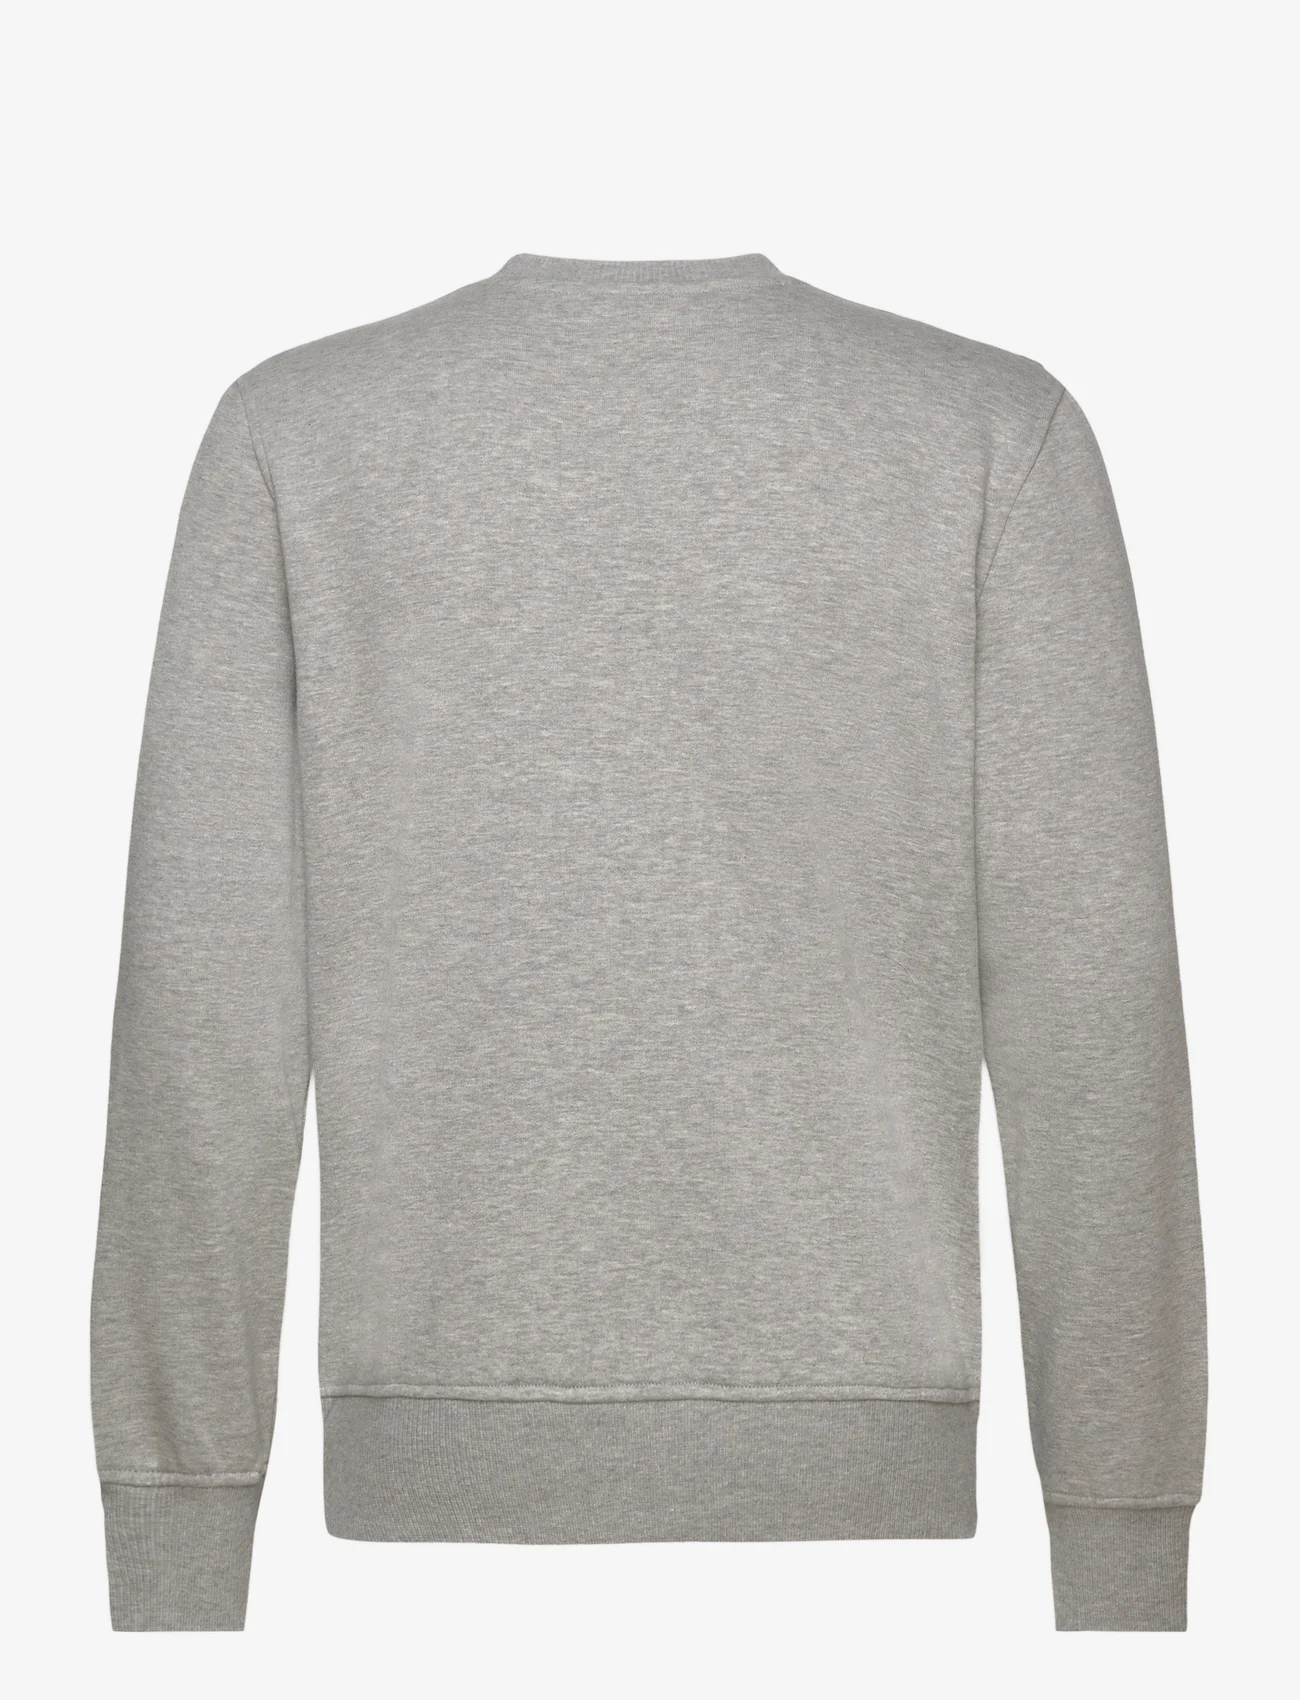 HAN Kjøbenhavn - Regular Crewneck Artwork - hoodies - grey melange - 1